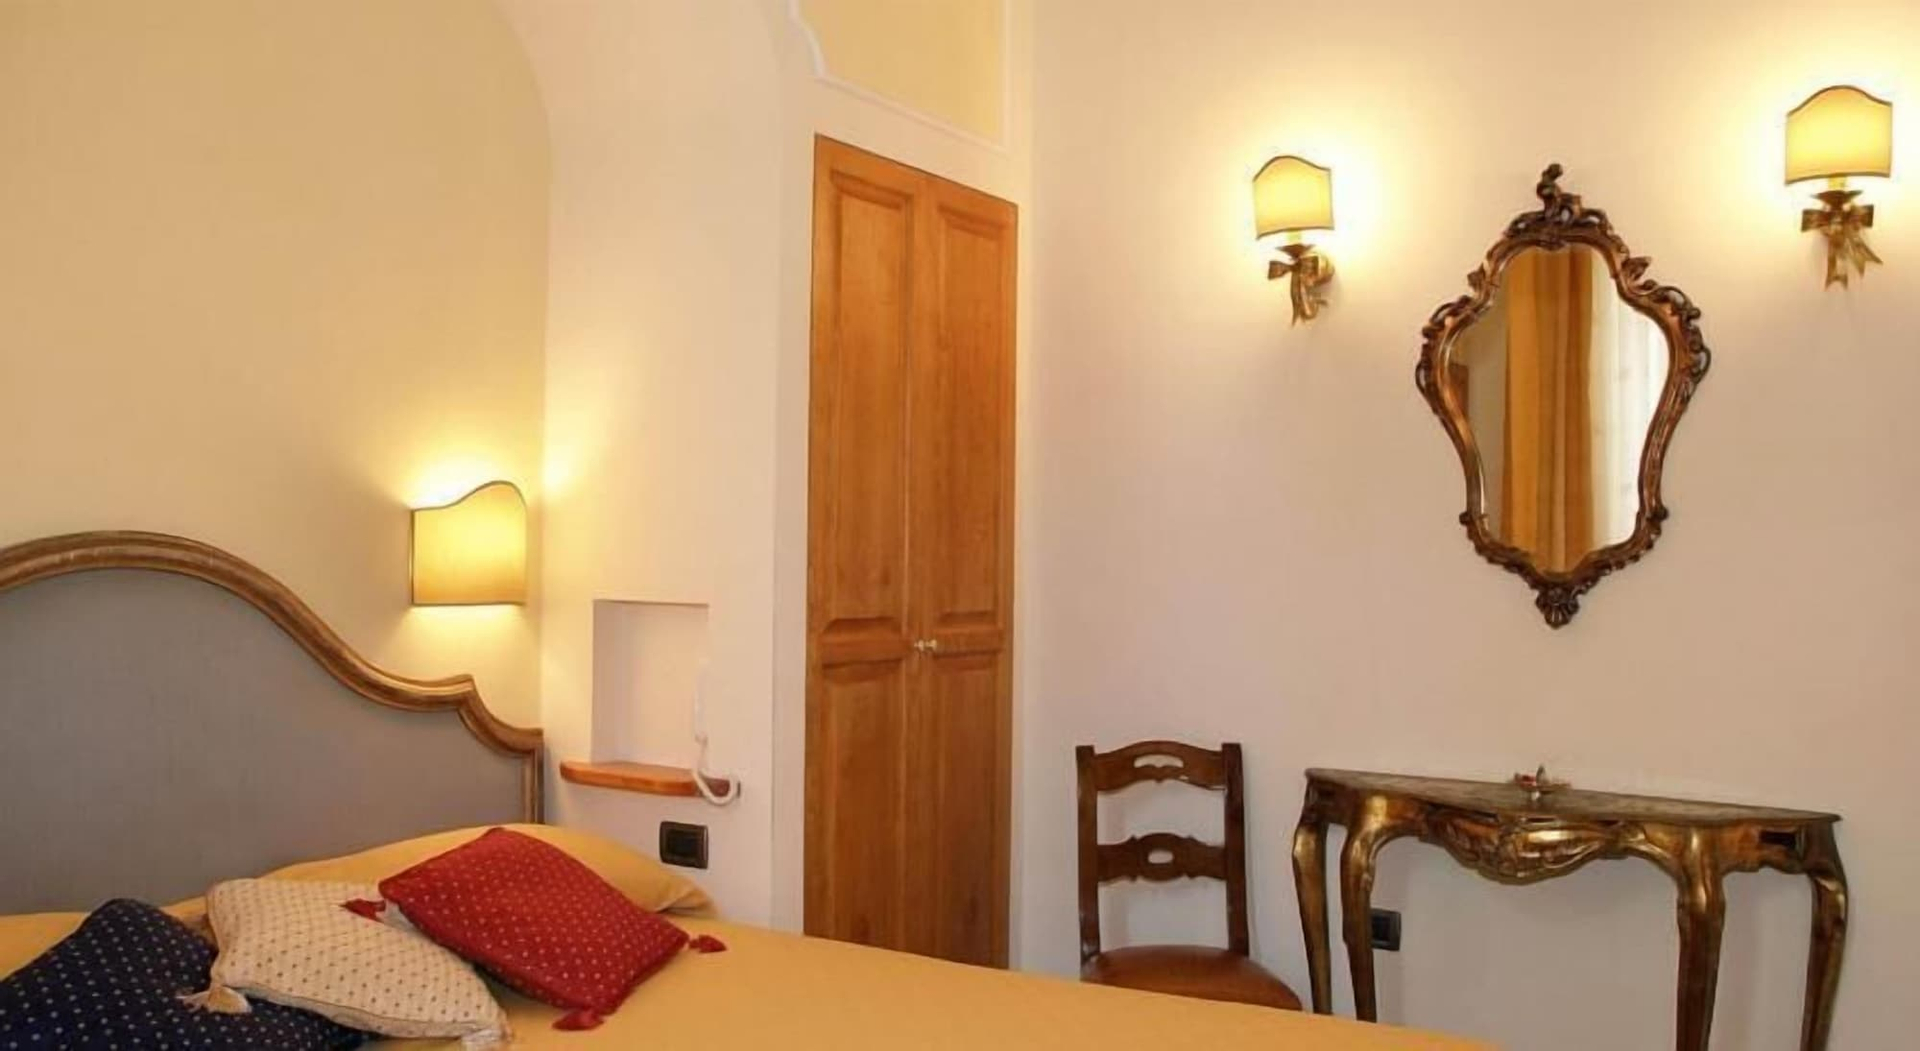 Bedroom 4, Petit Chateau, Pistoia